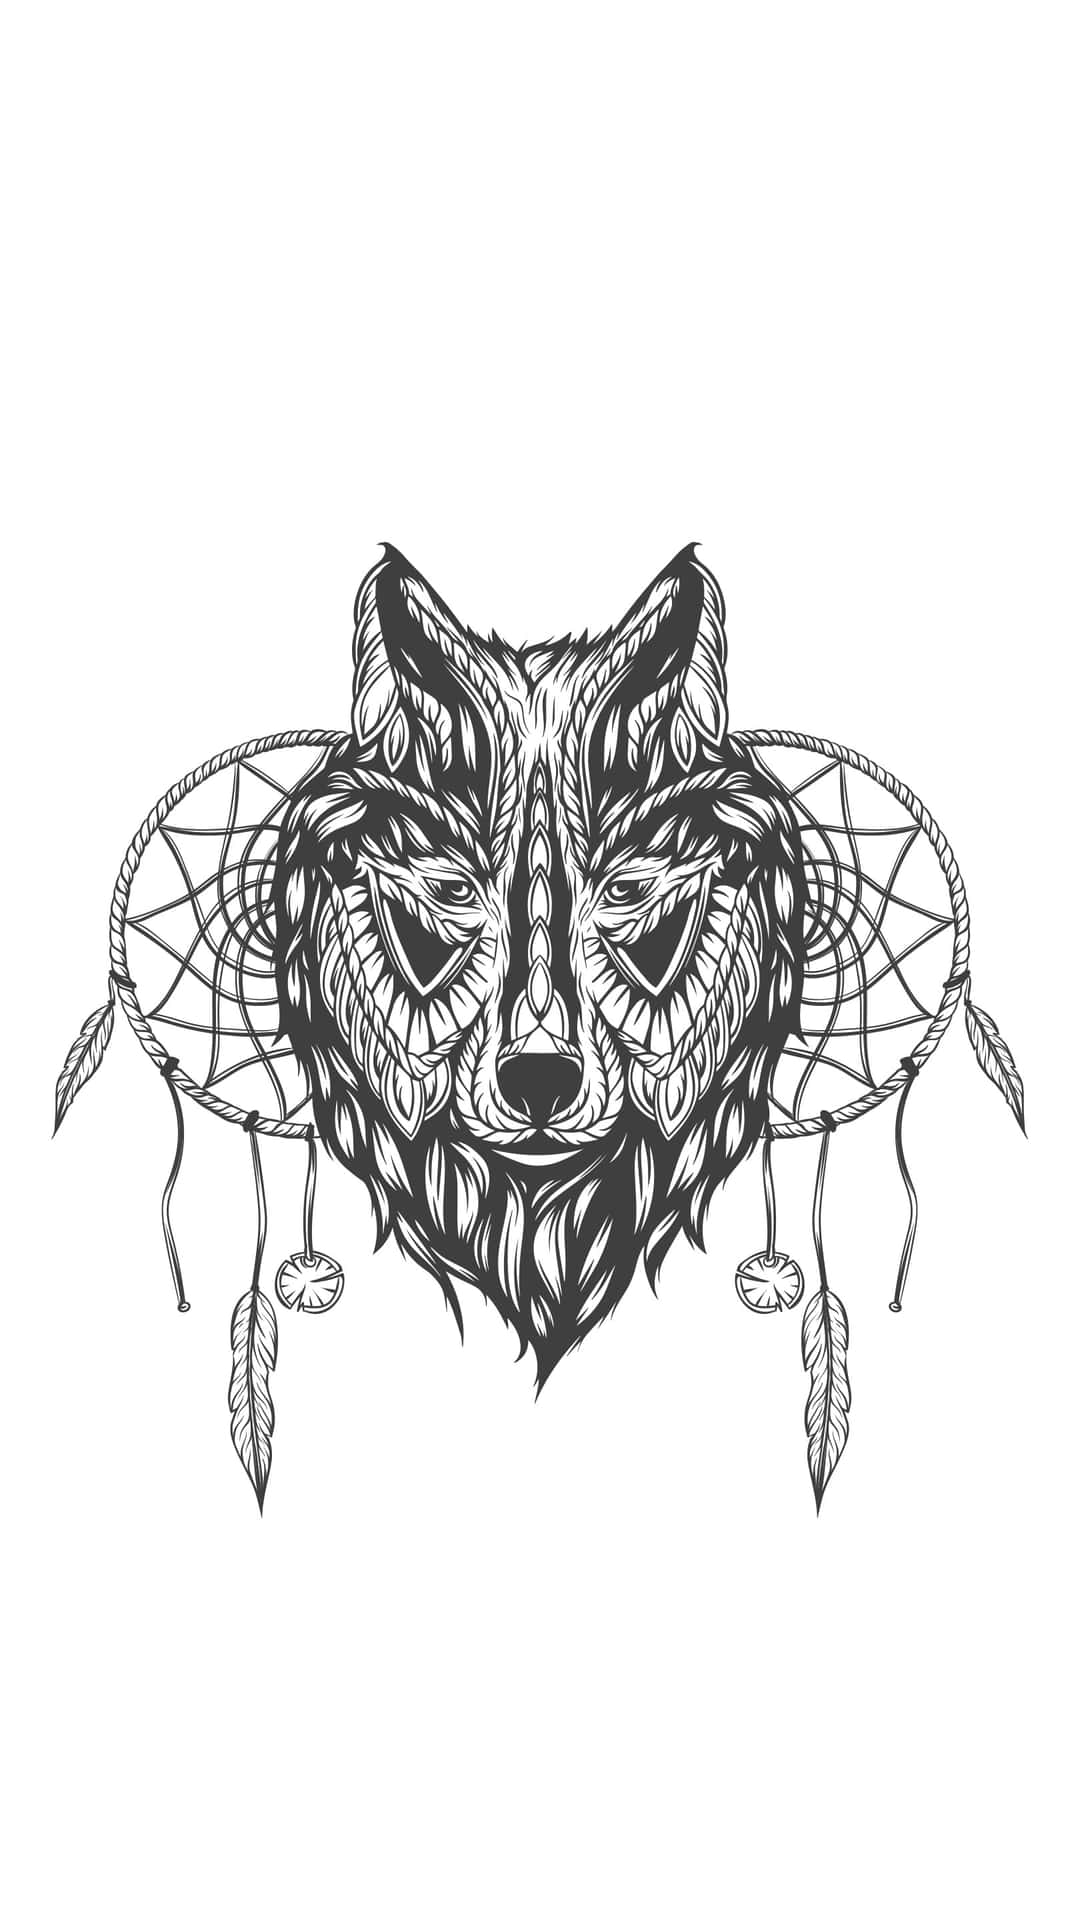 Majestic Wolf Tattoo Design on Black Background Wallpaper